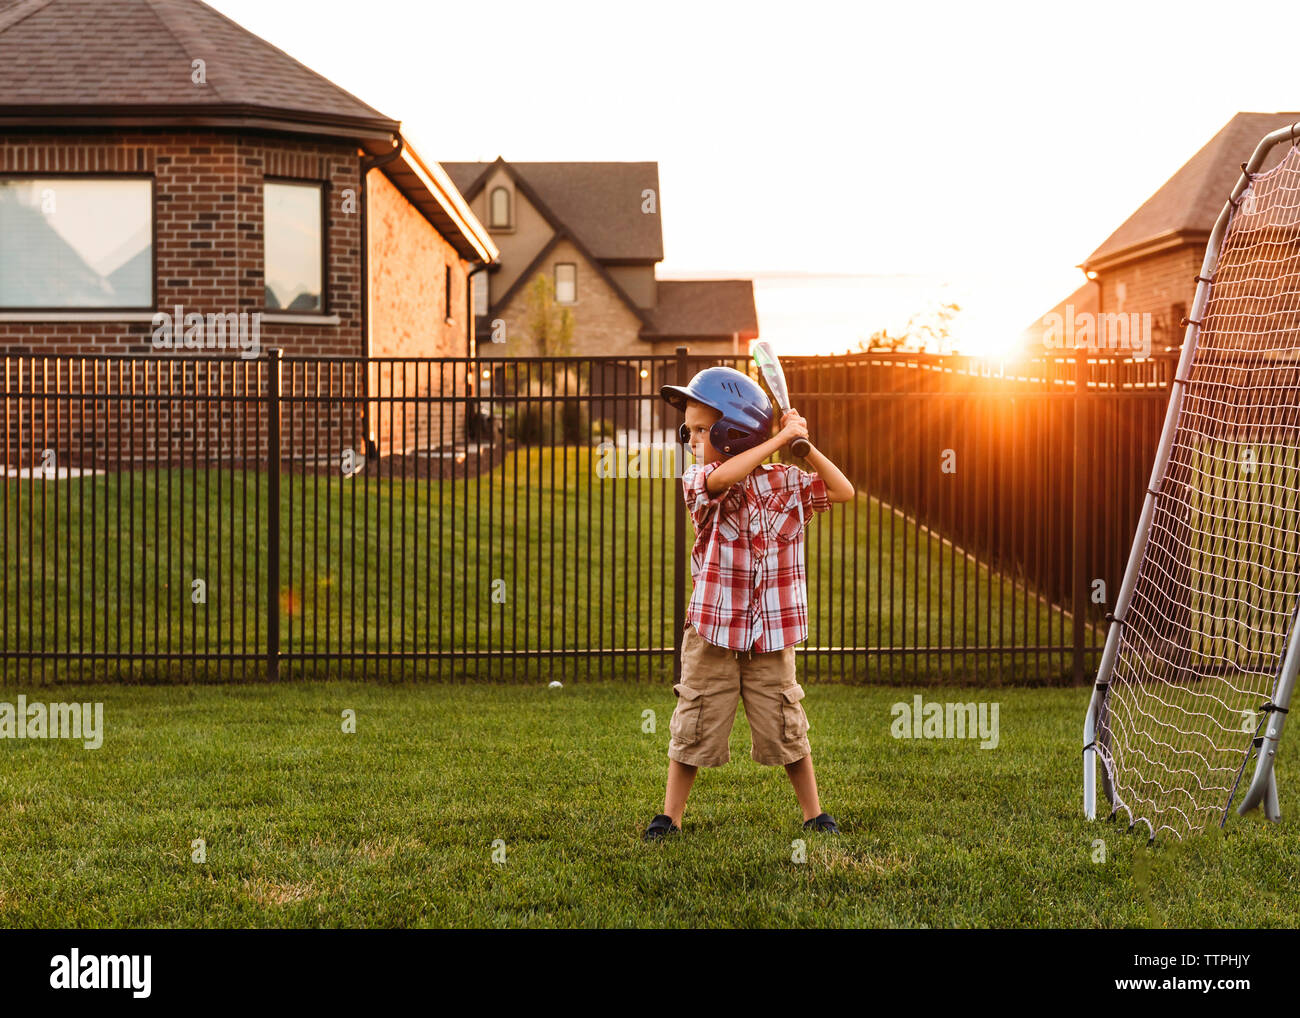 Junge spielt Baseball im Hinterhof bei Sonnenuntergang Stockfoto